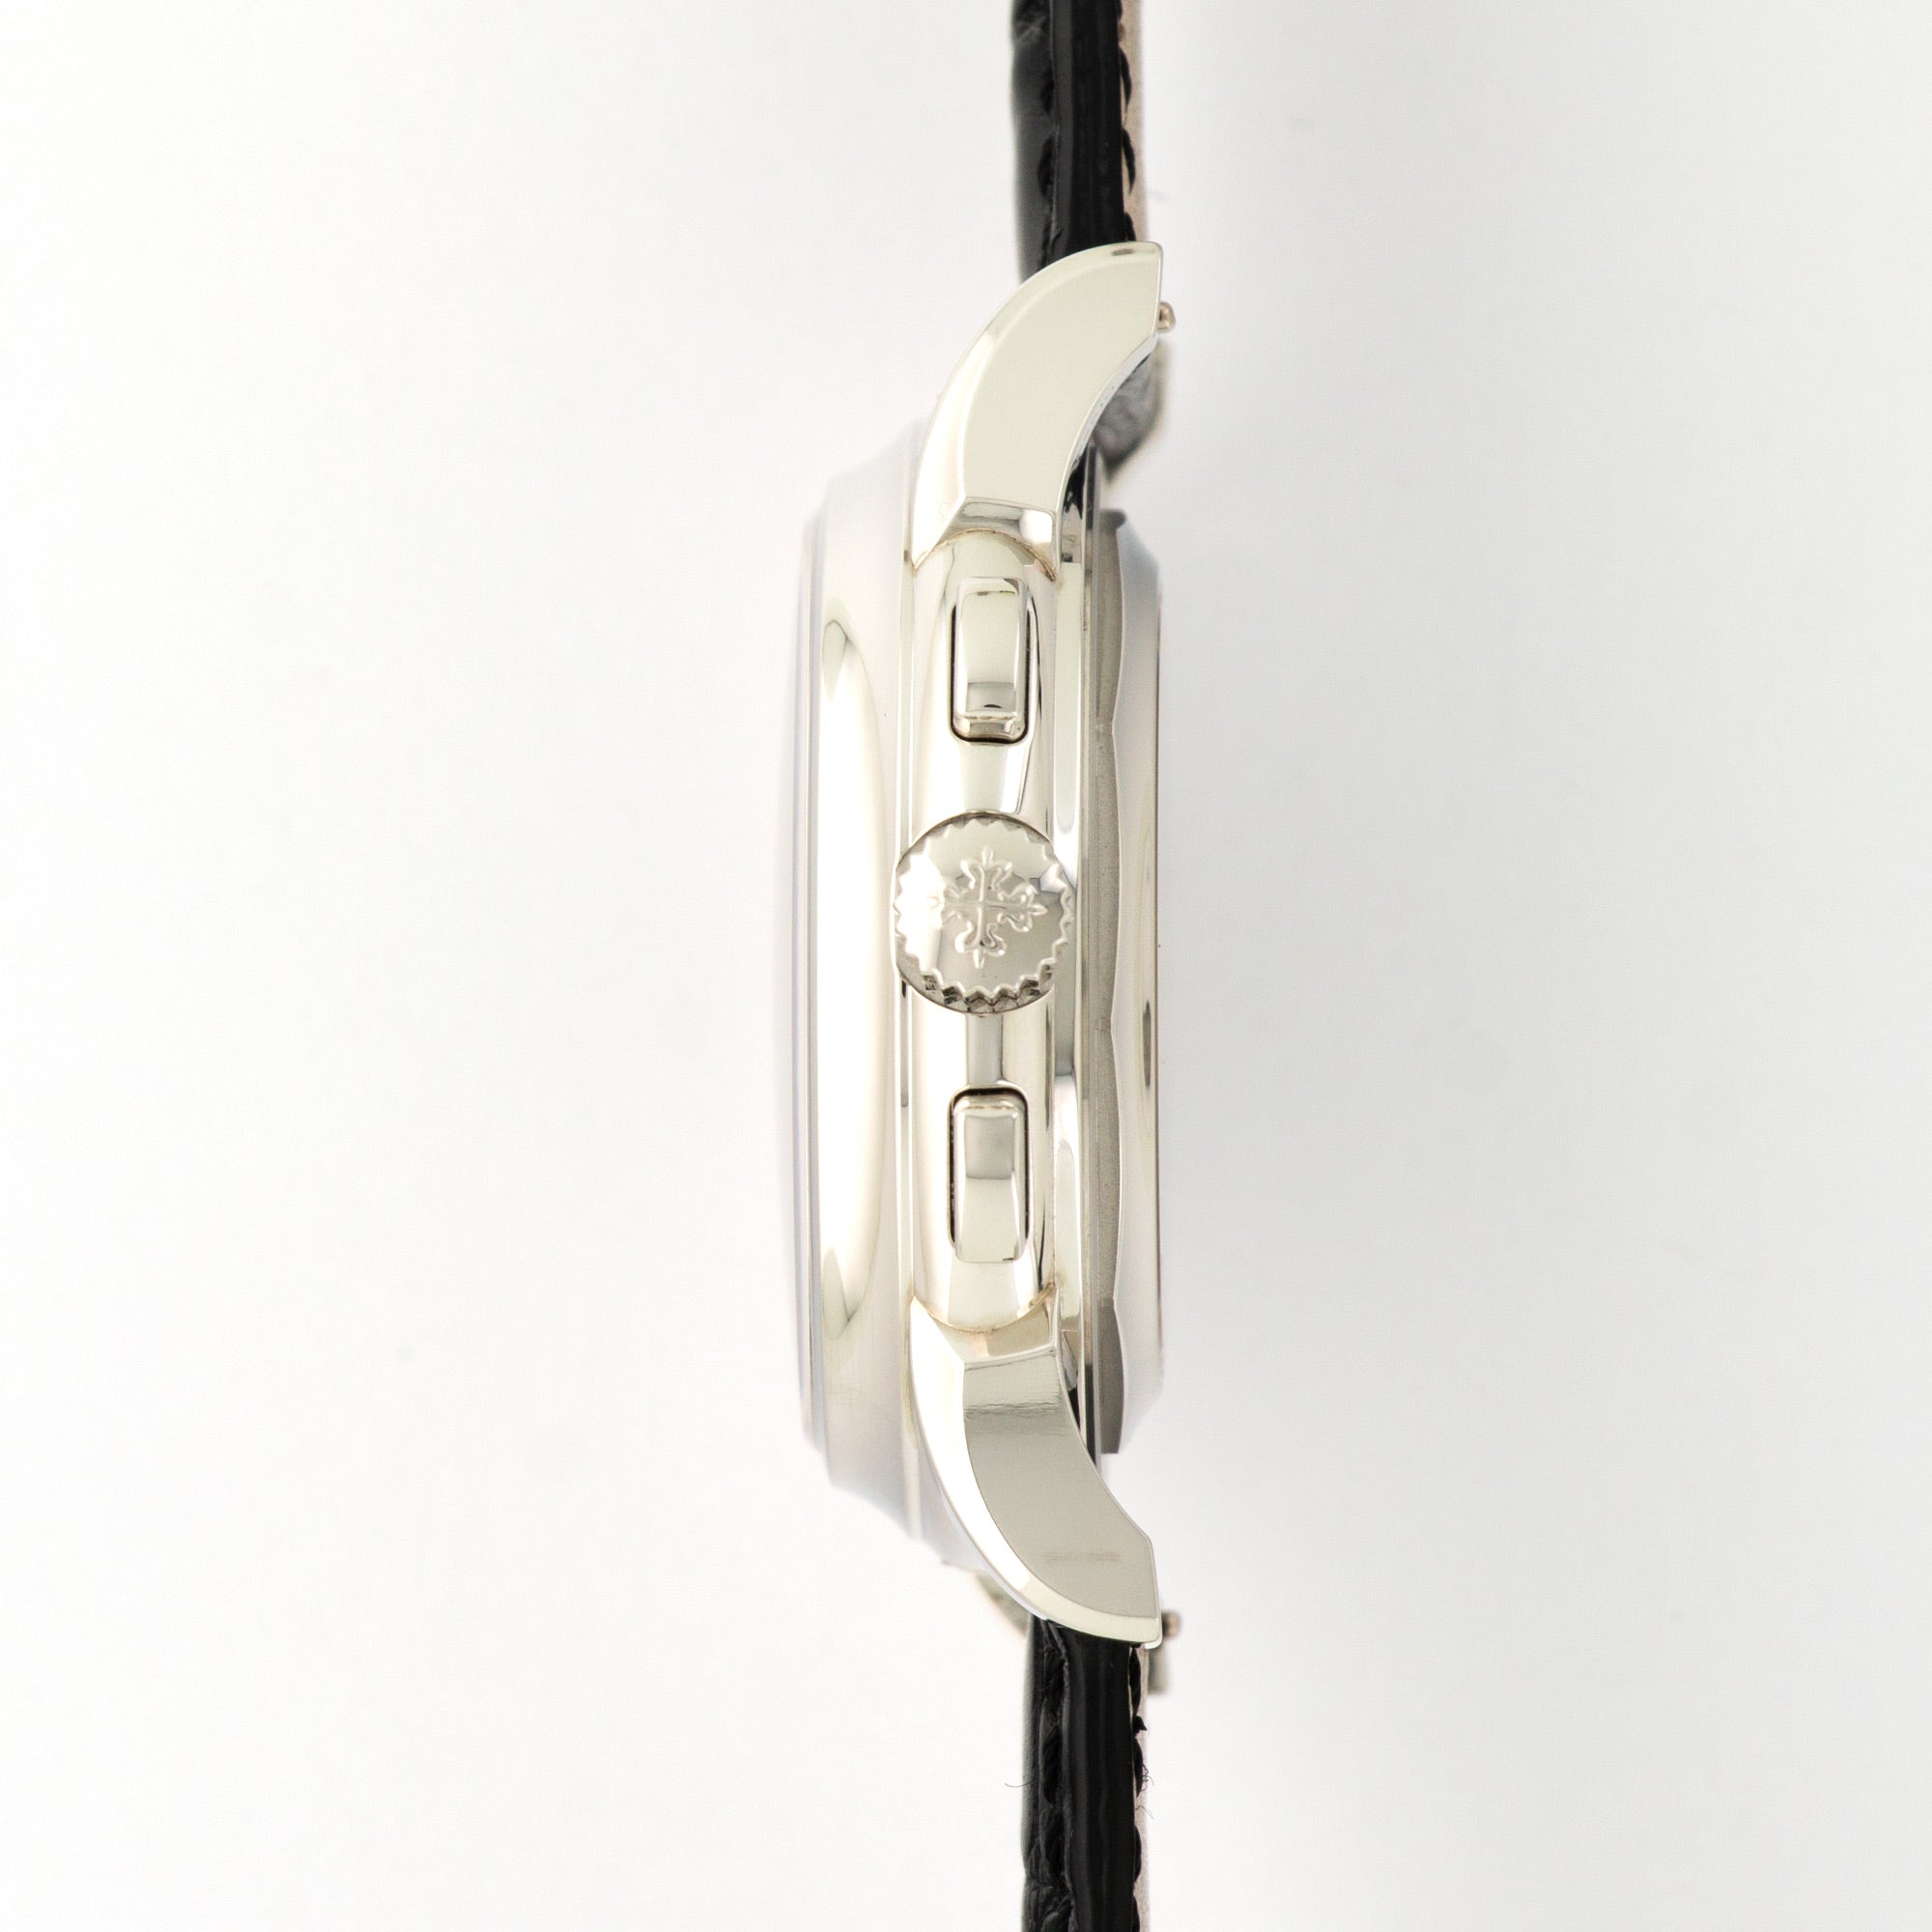 Patek Philippe - Patek Philippe Platinum Perpetual Calendar Chrono Watch Ref. 5970 - The Keystone Watches